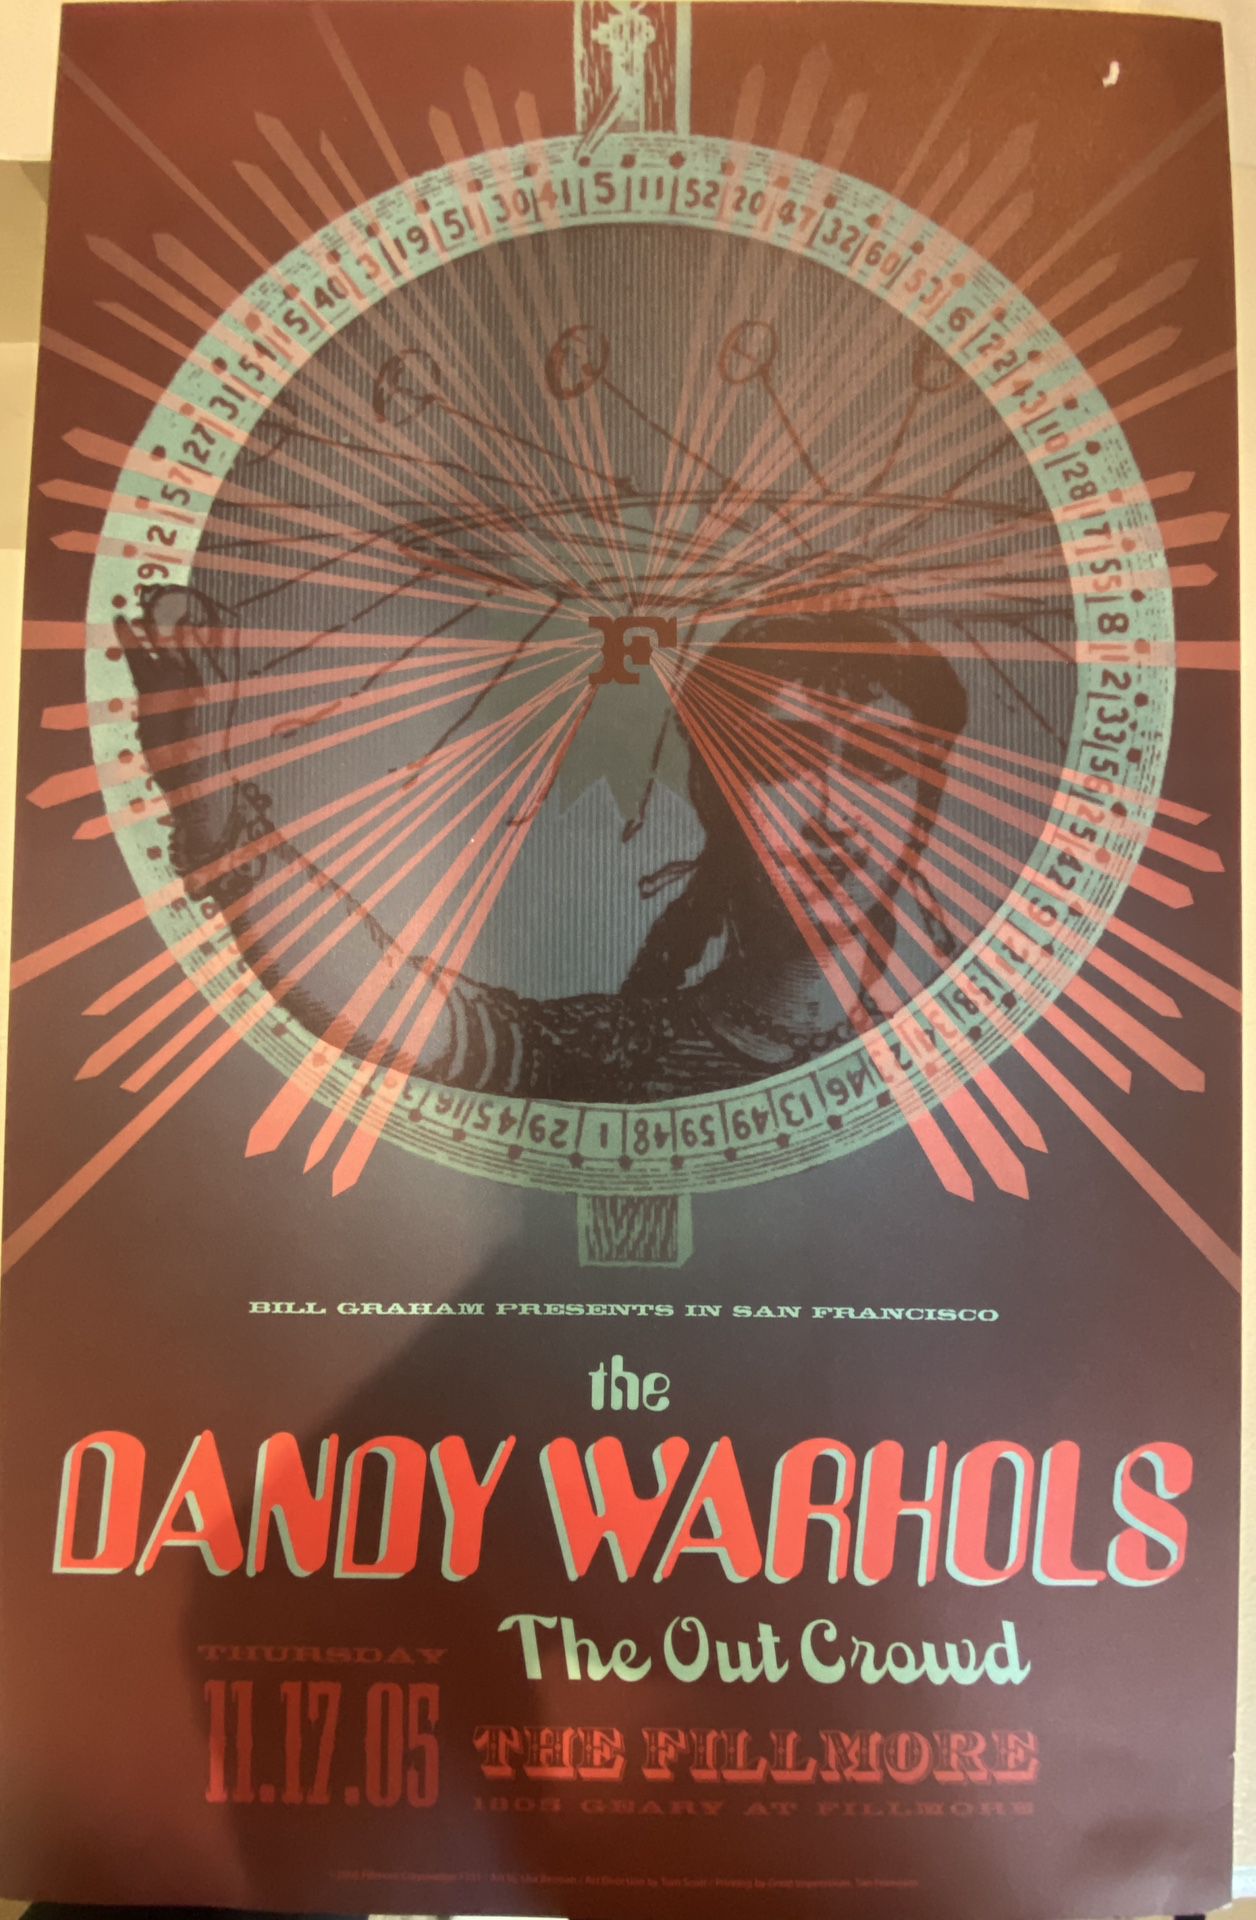 Rare Concert Poster. The dandy Warhols. 20”x14”